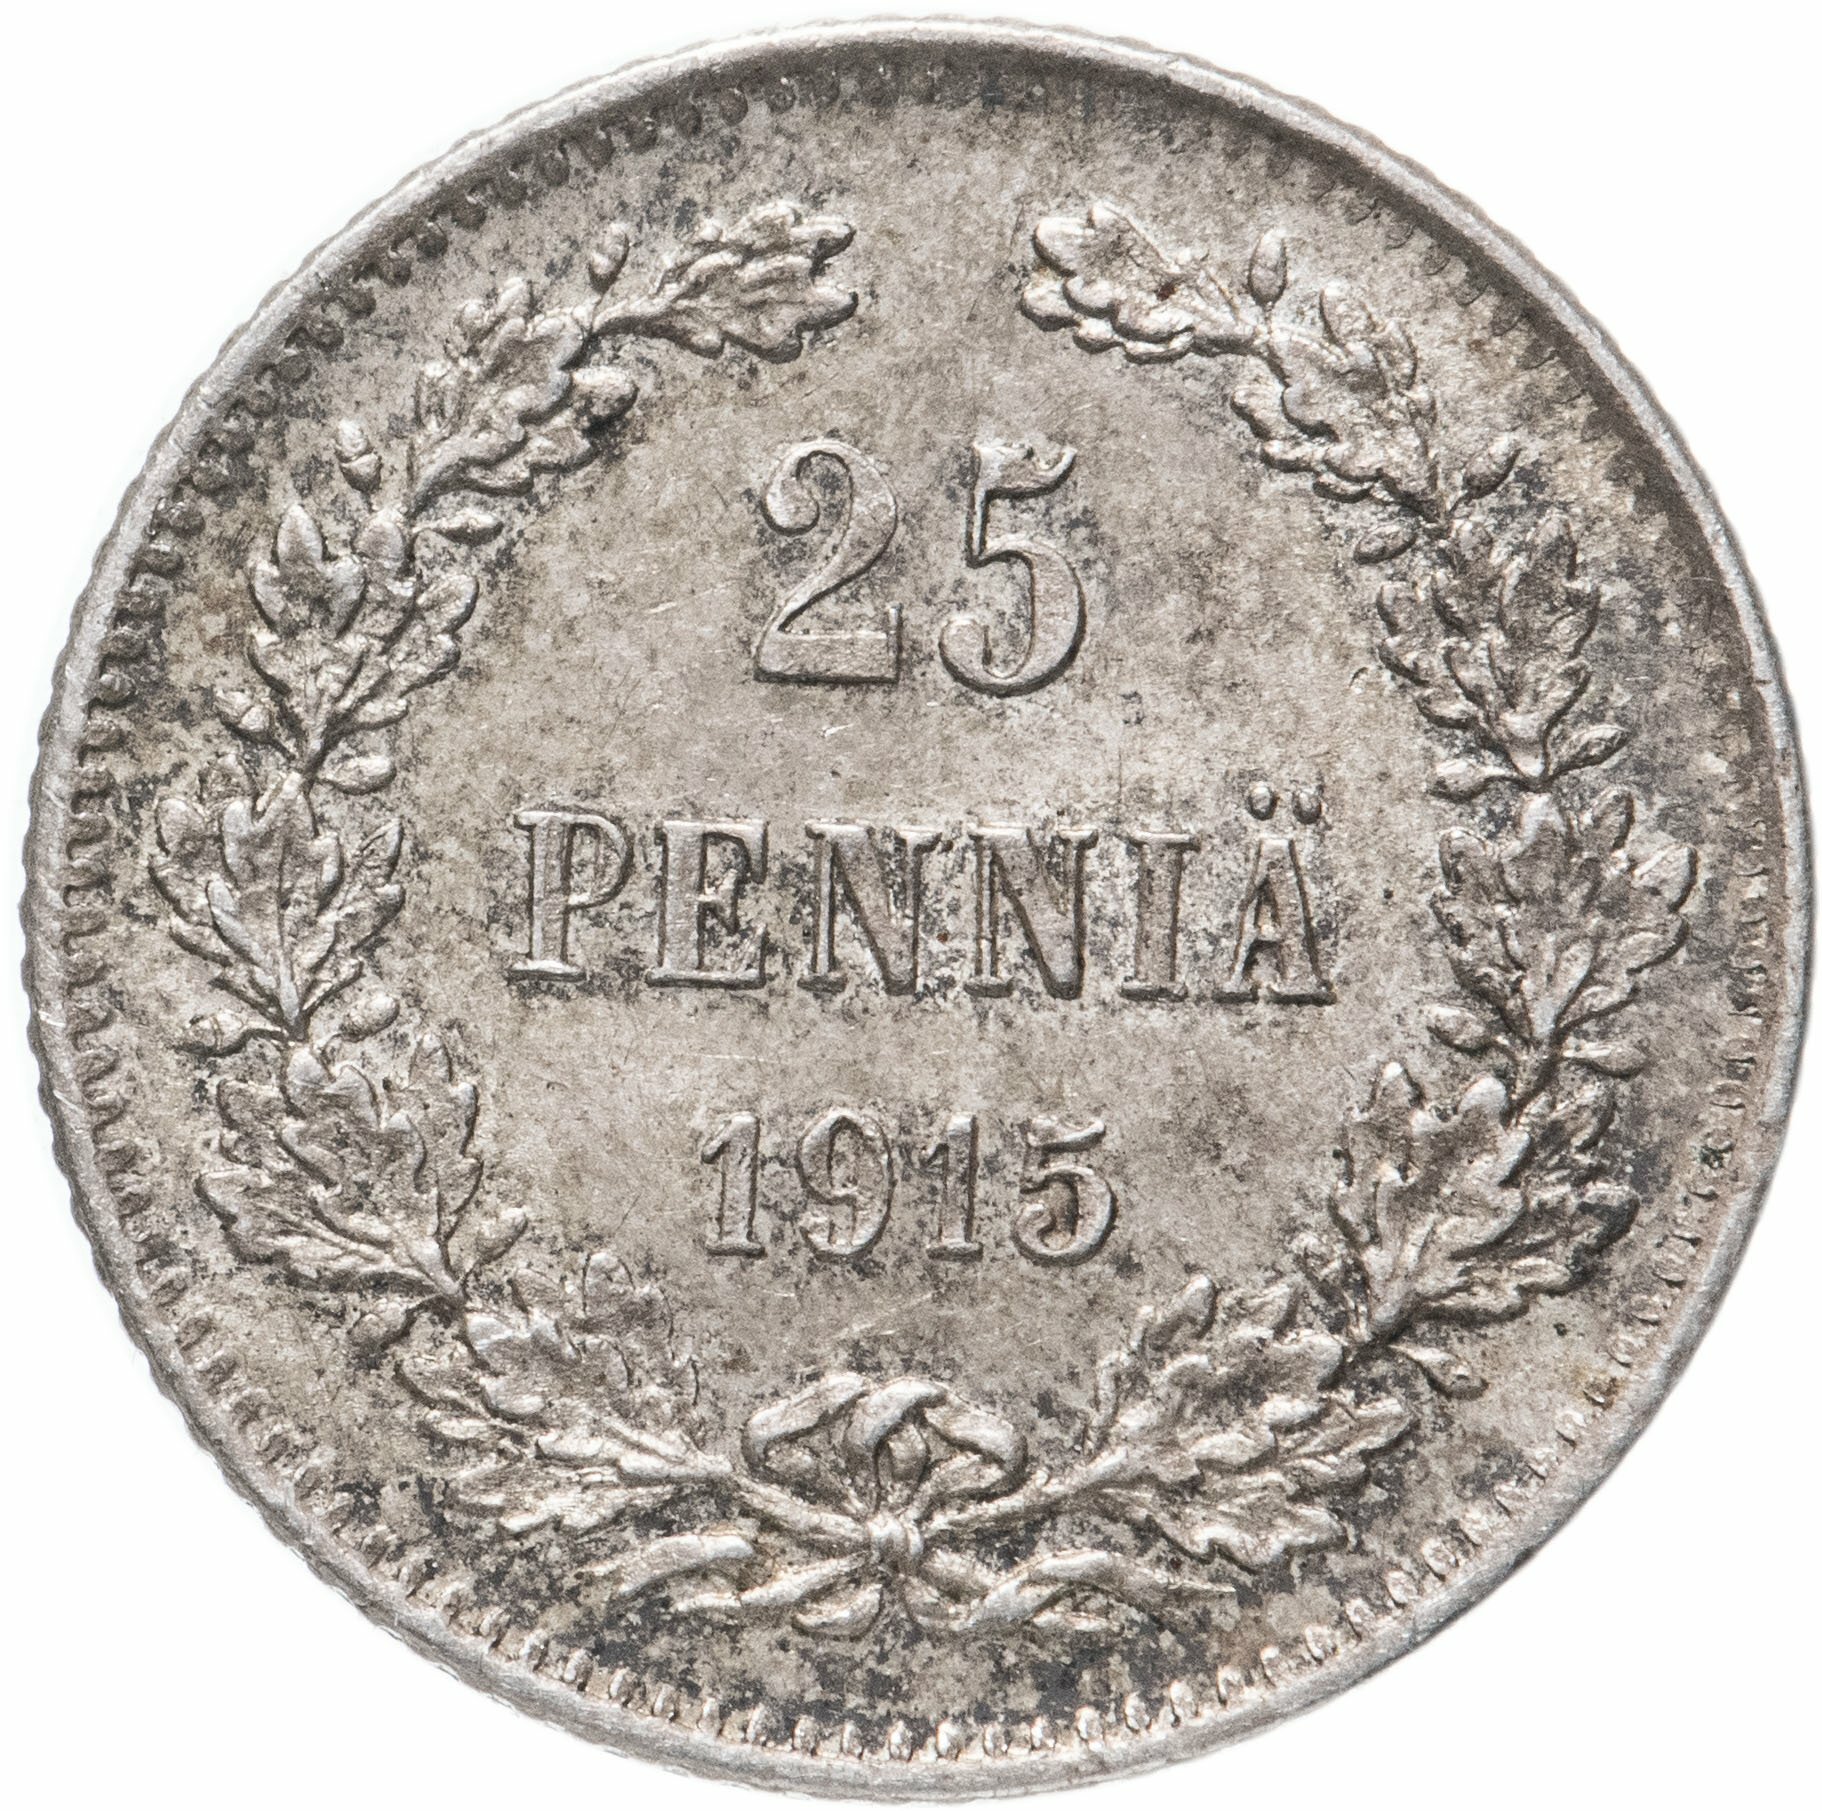 25 пенни (pennia) 1915 S